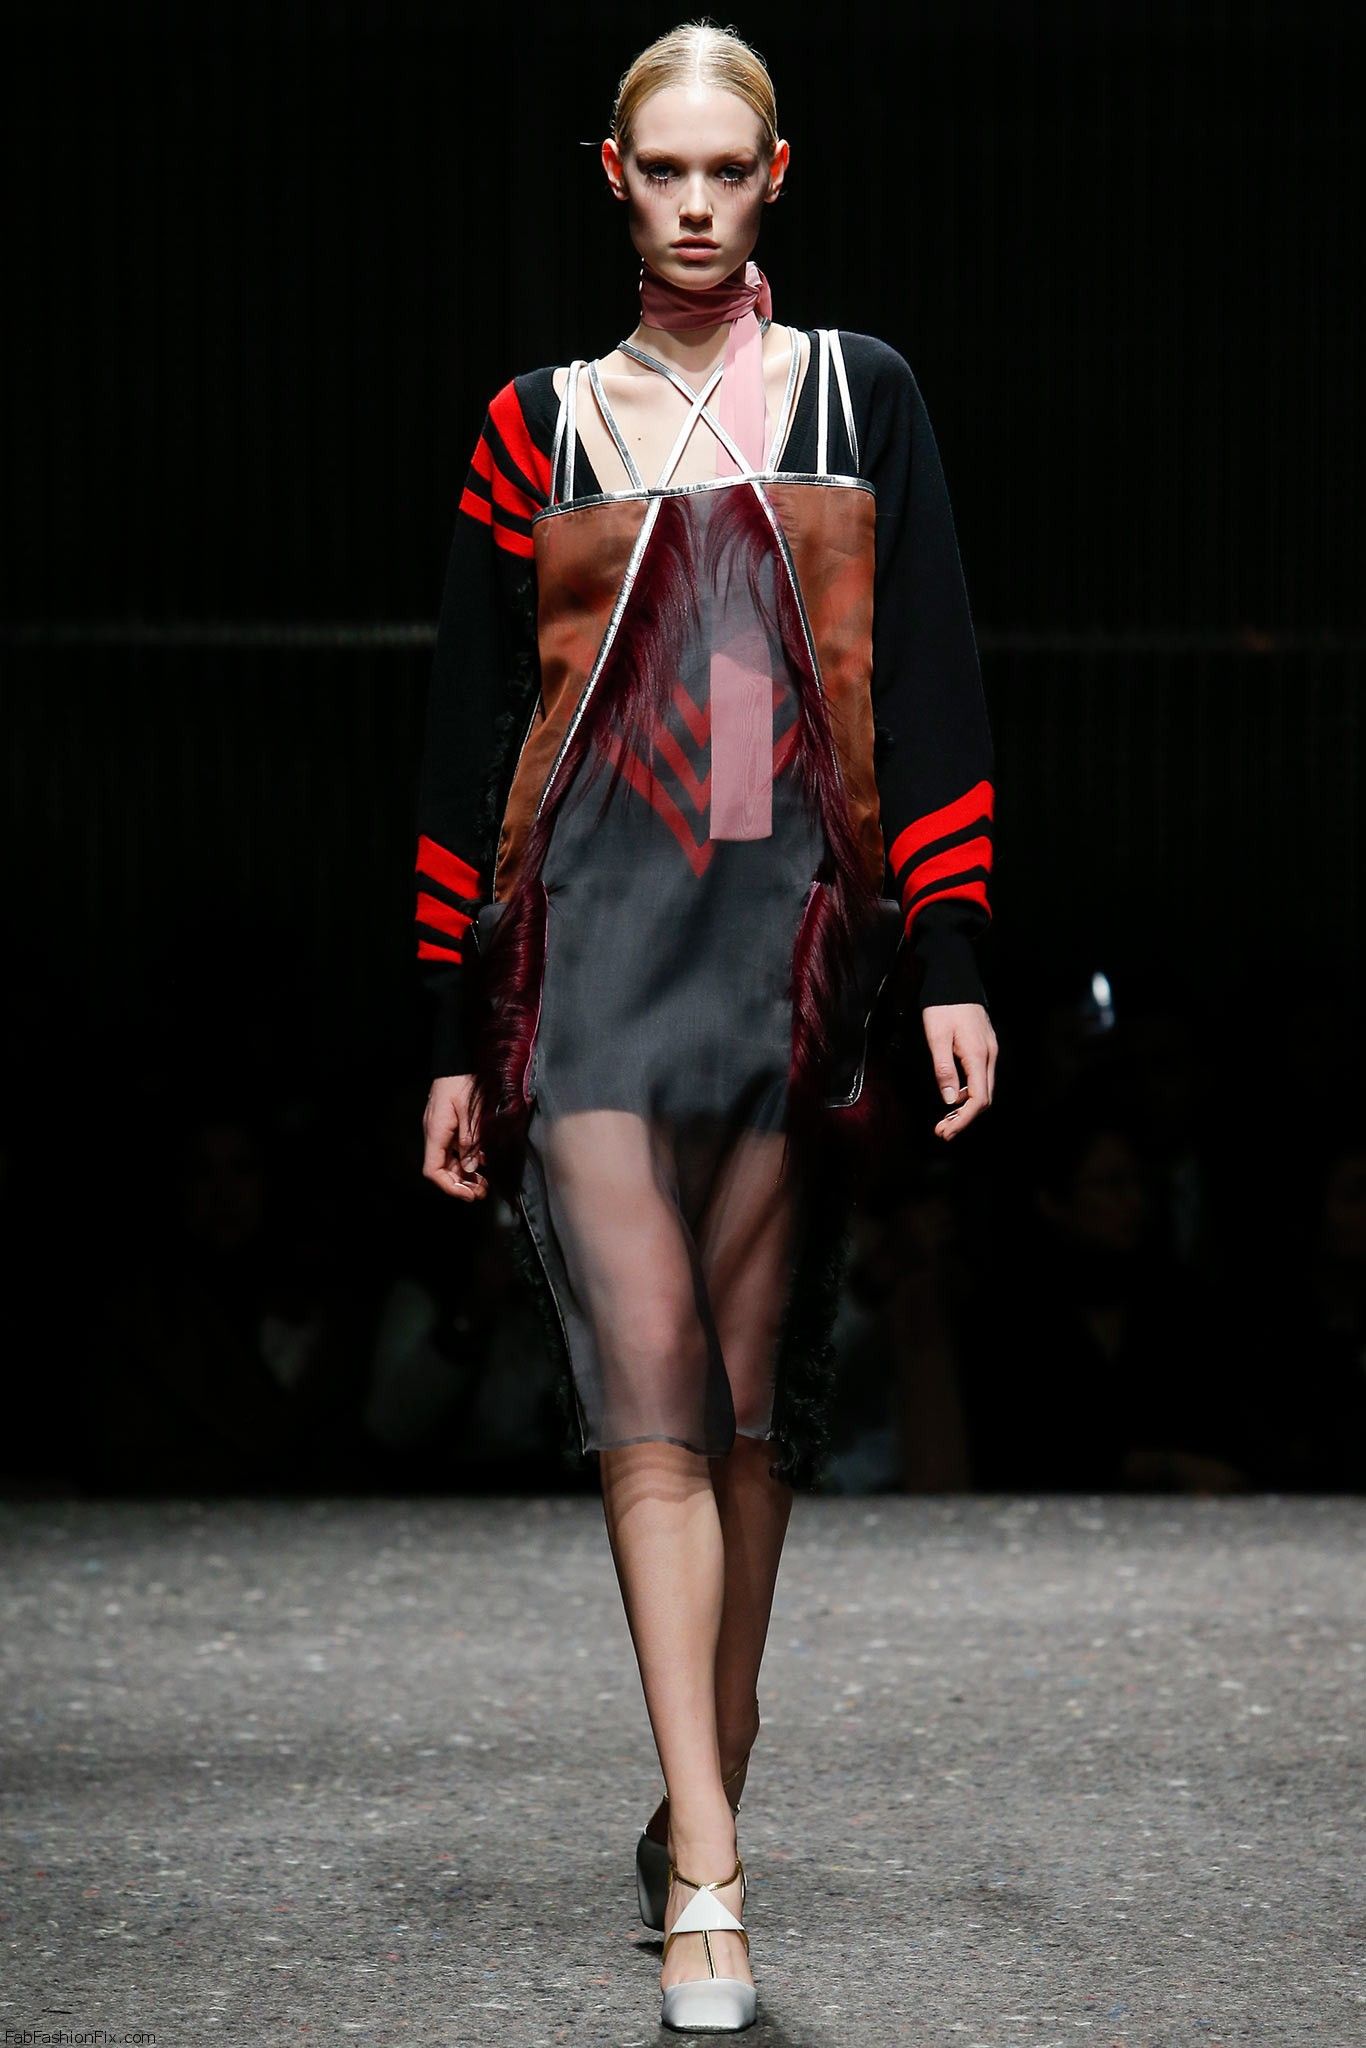 Prada fall/winter 2014 collection – Milan fashion week | Fab Fashion Fix